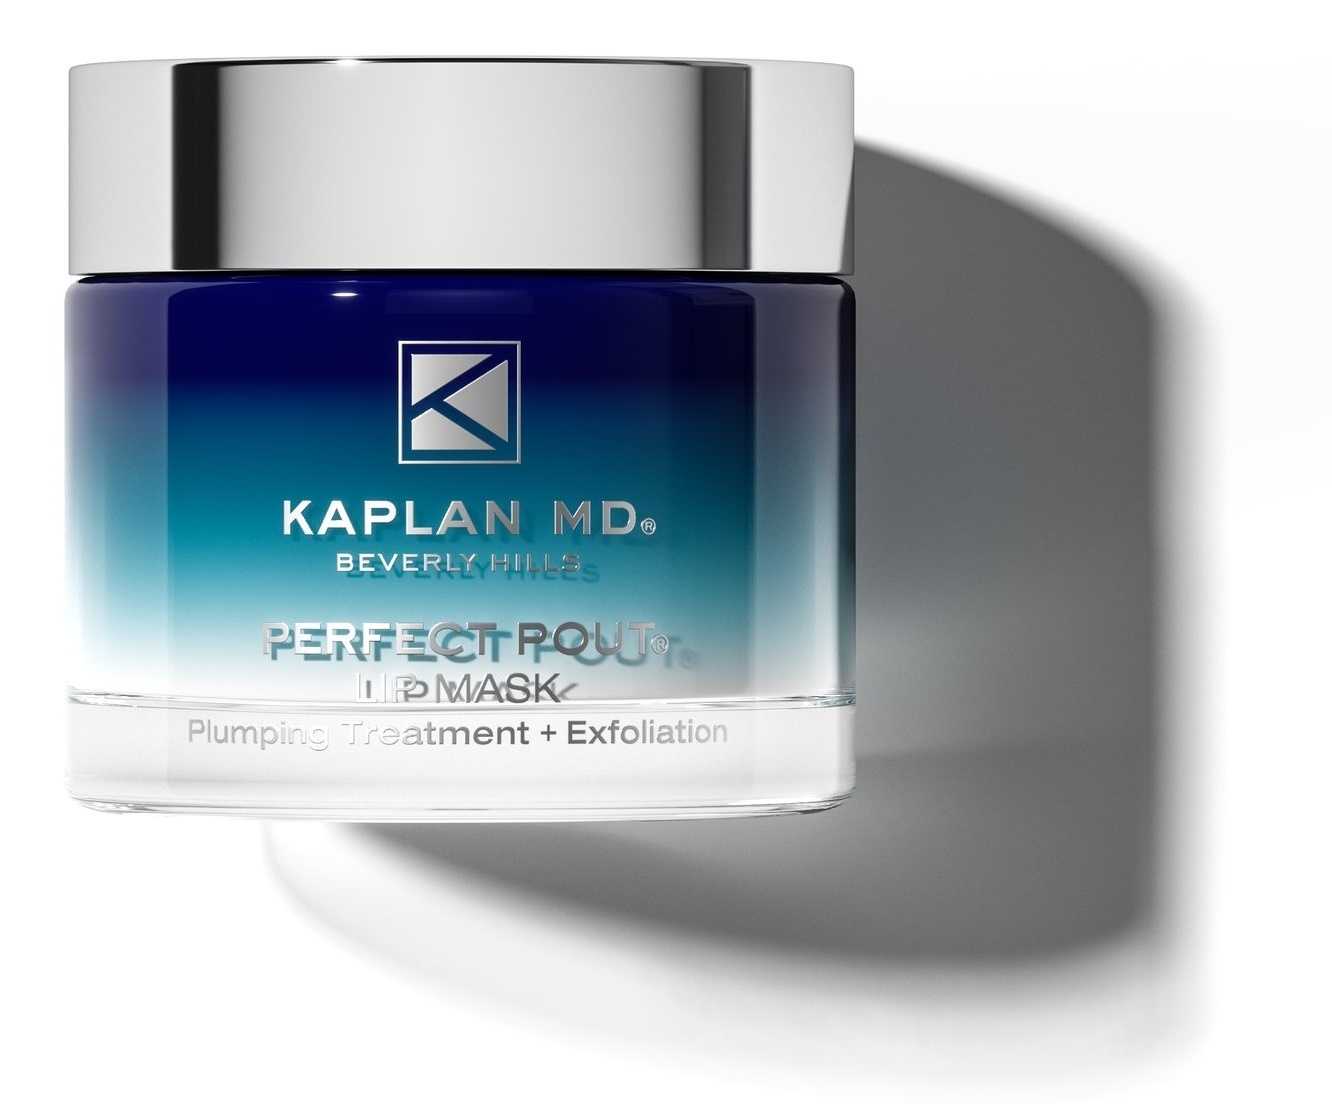 *** Free Gift - KaplanMD Perfect Pout Lip Mask - Plumping Treatment + Exfoliation